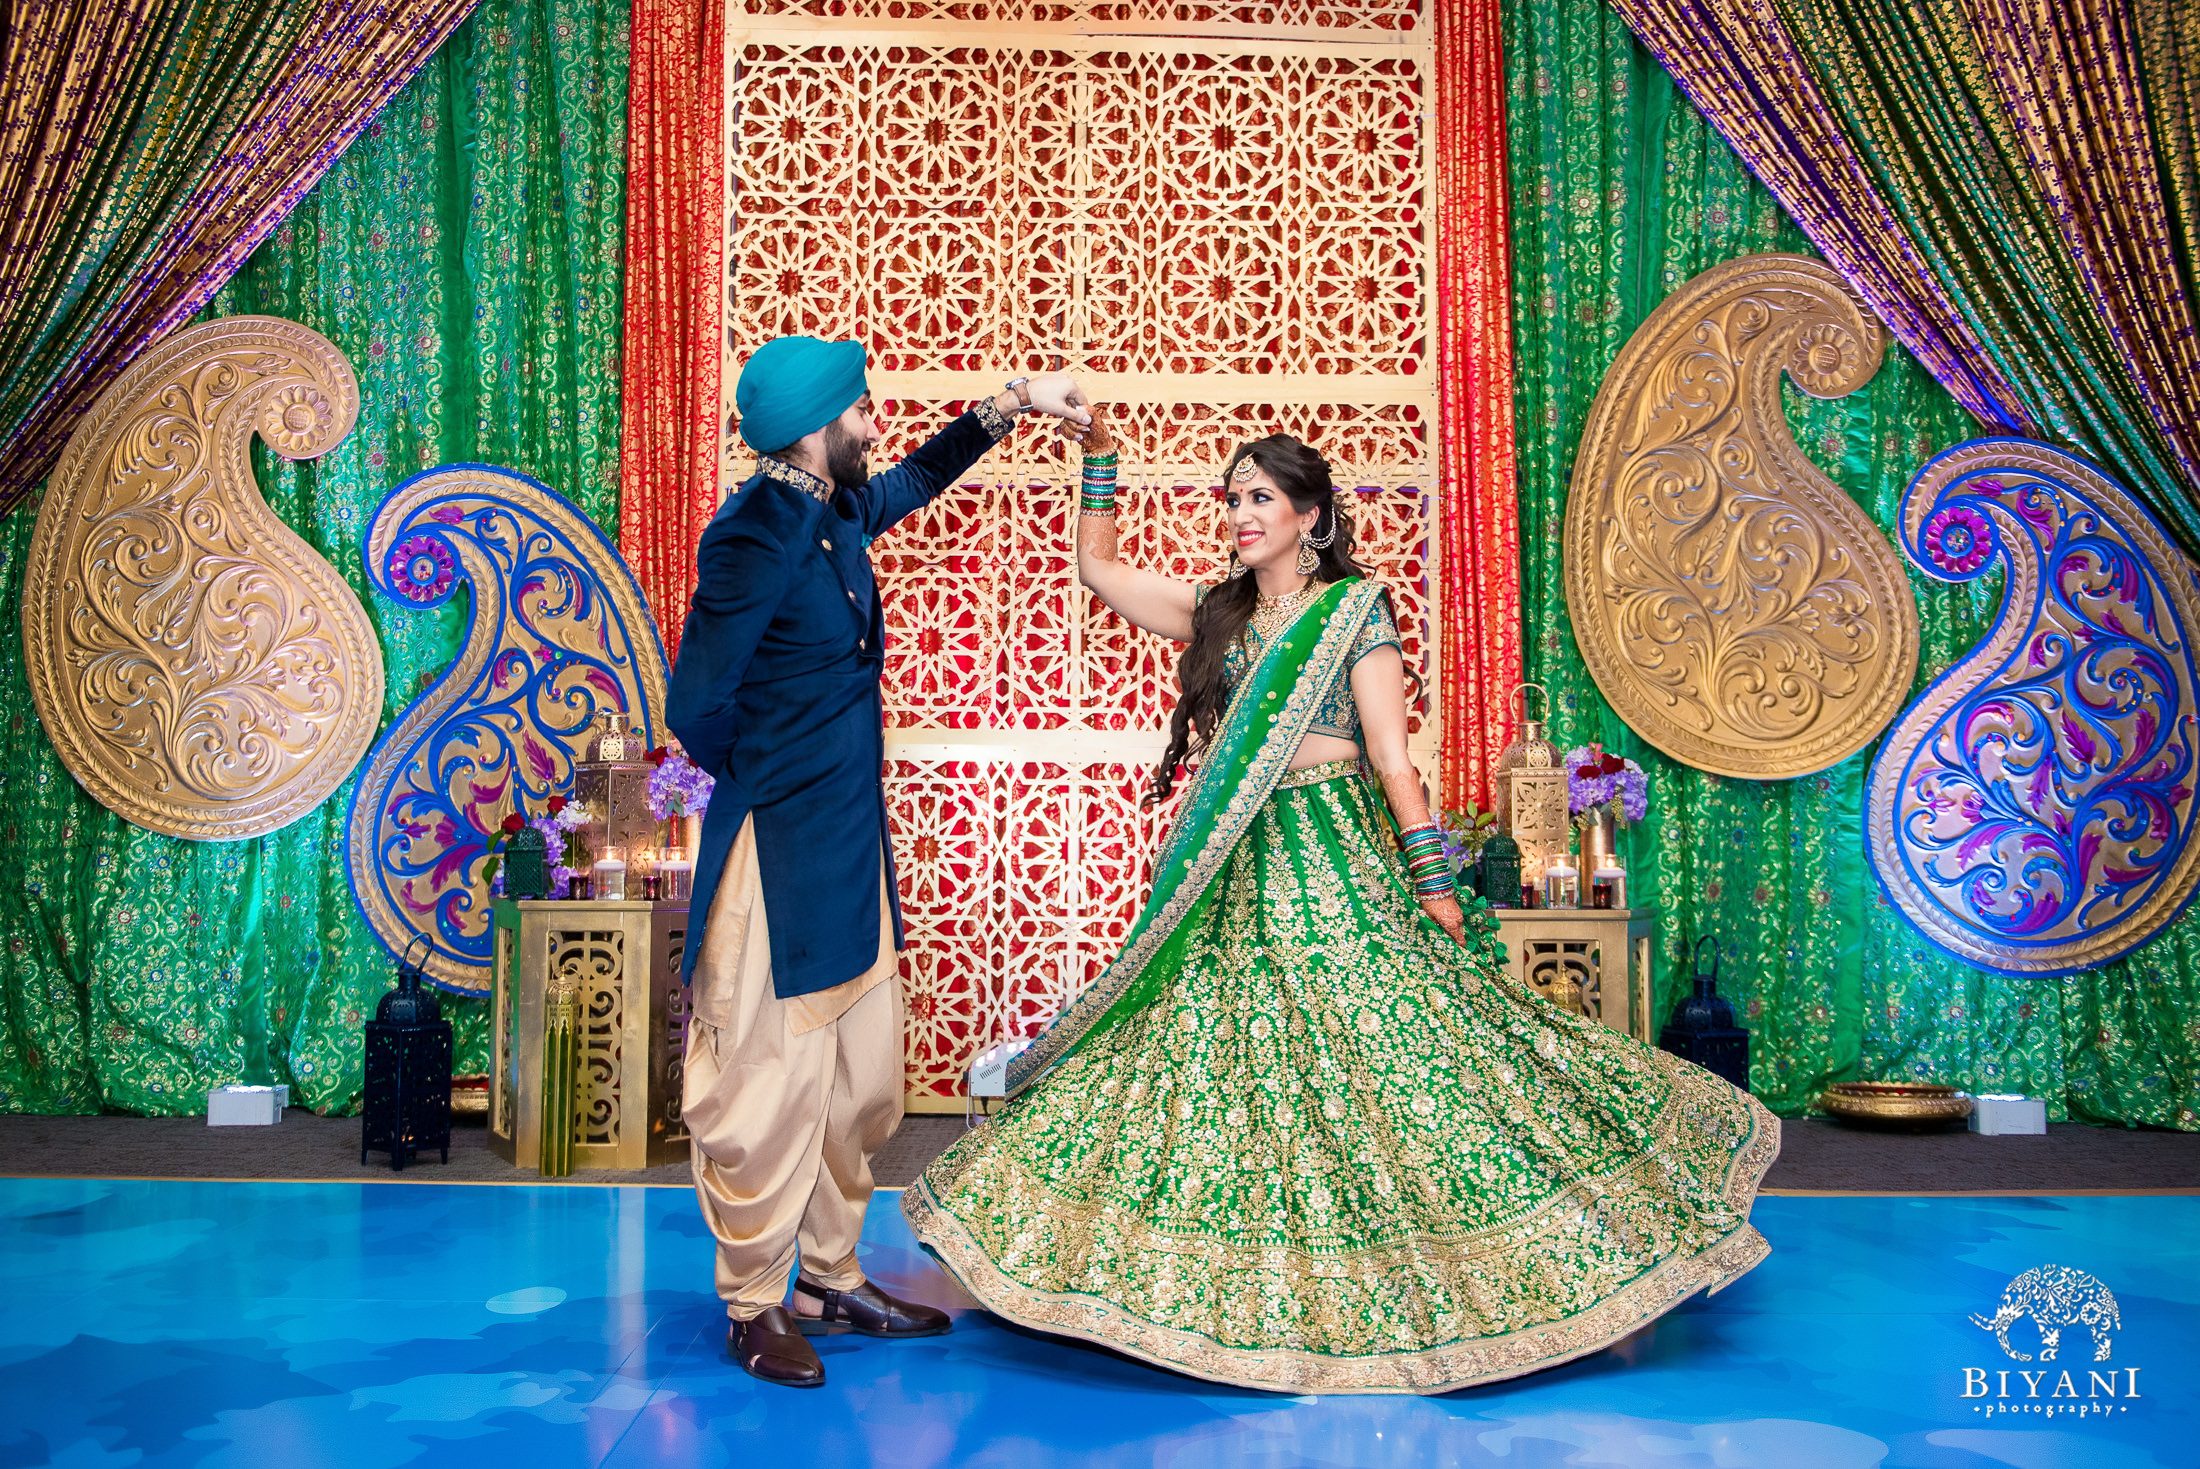 Punjabi bride and groom